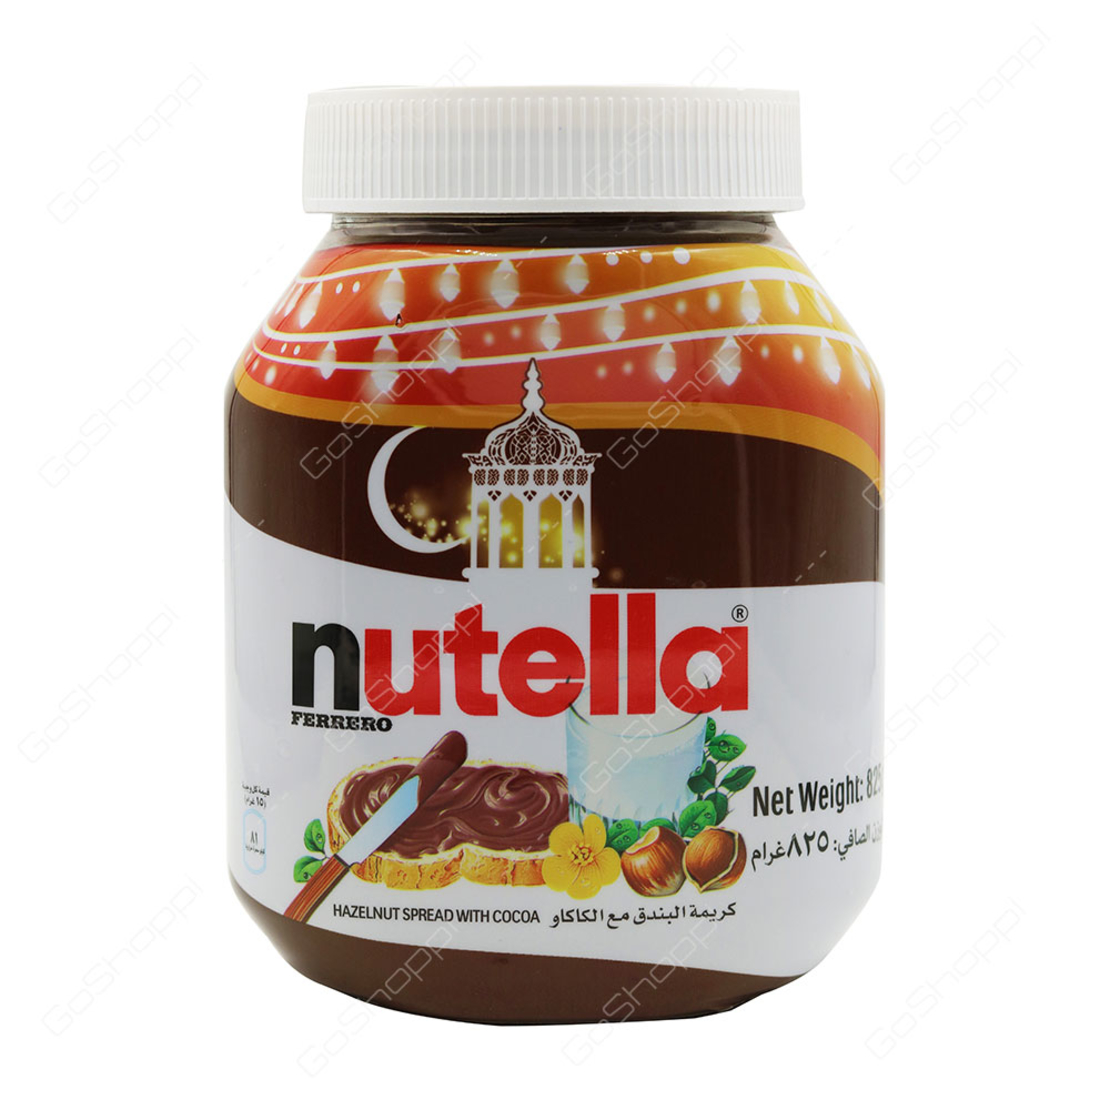 Nutella - Hazelnut Spread with Cocoa 825g